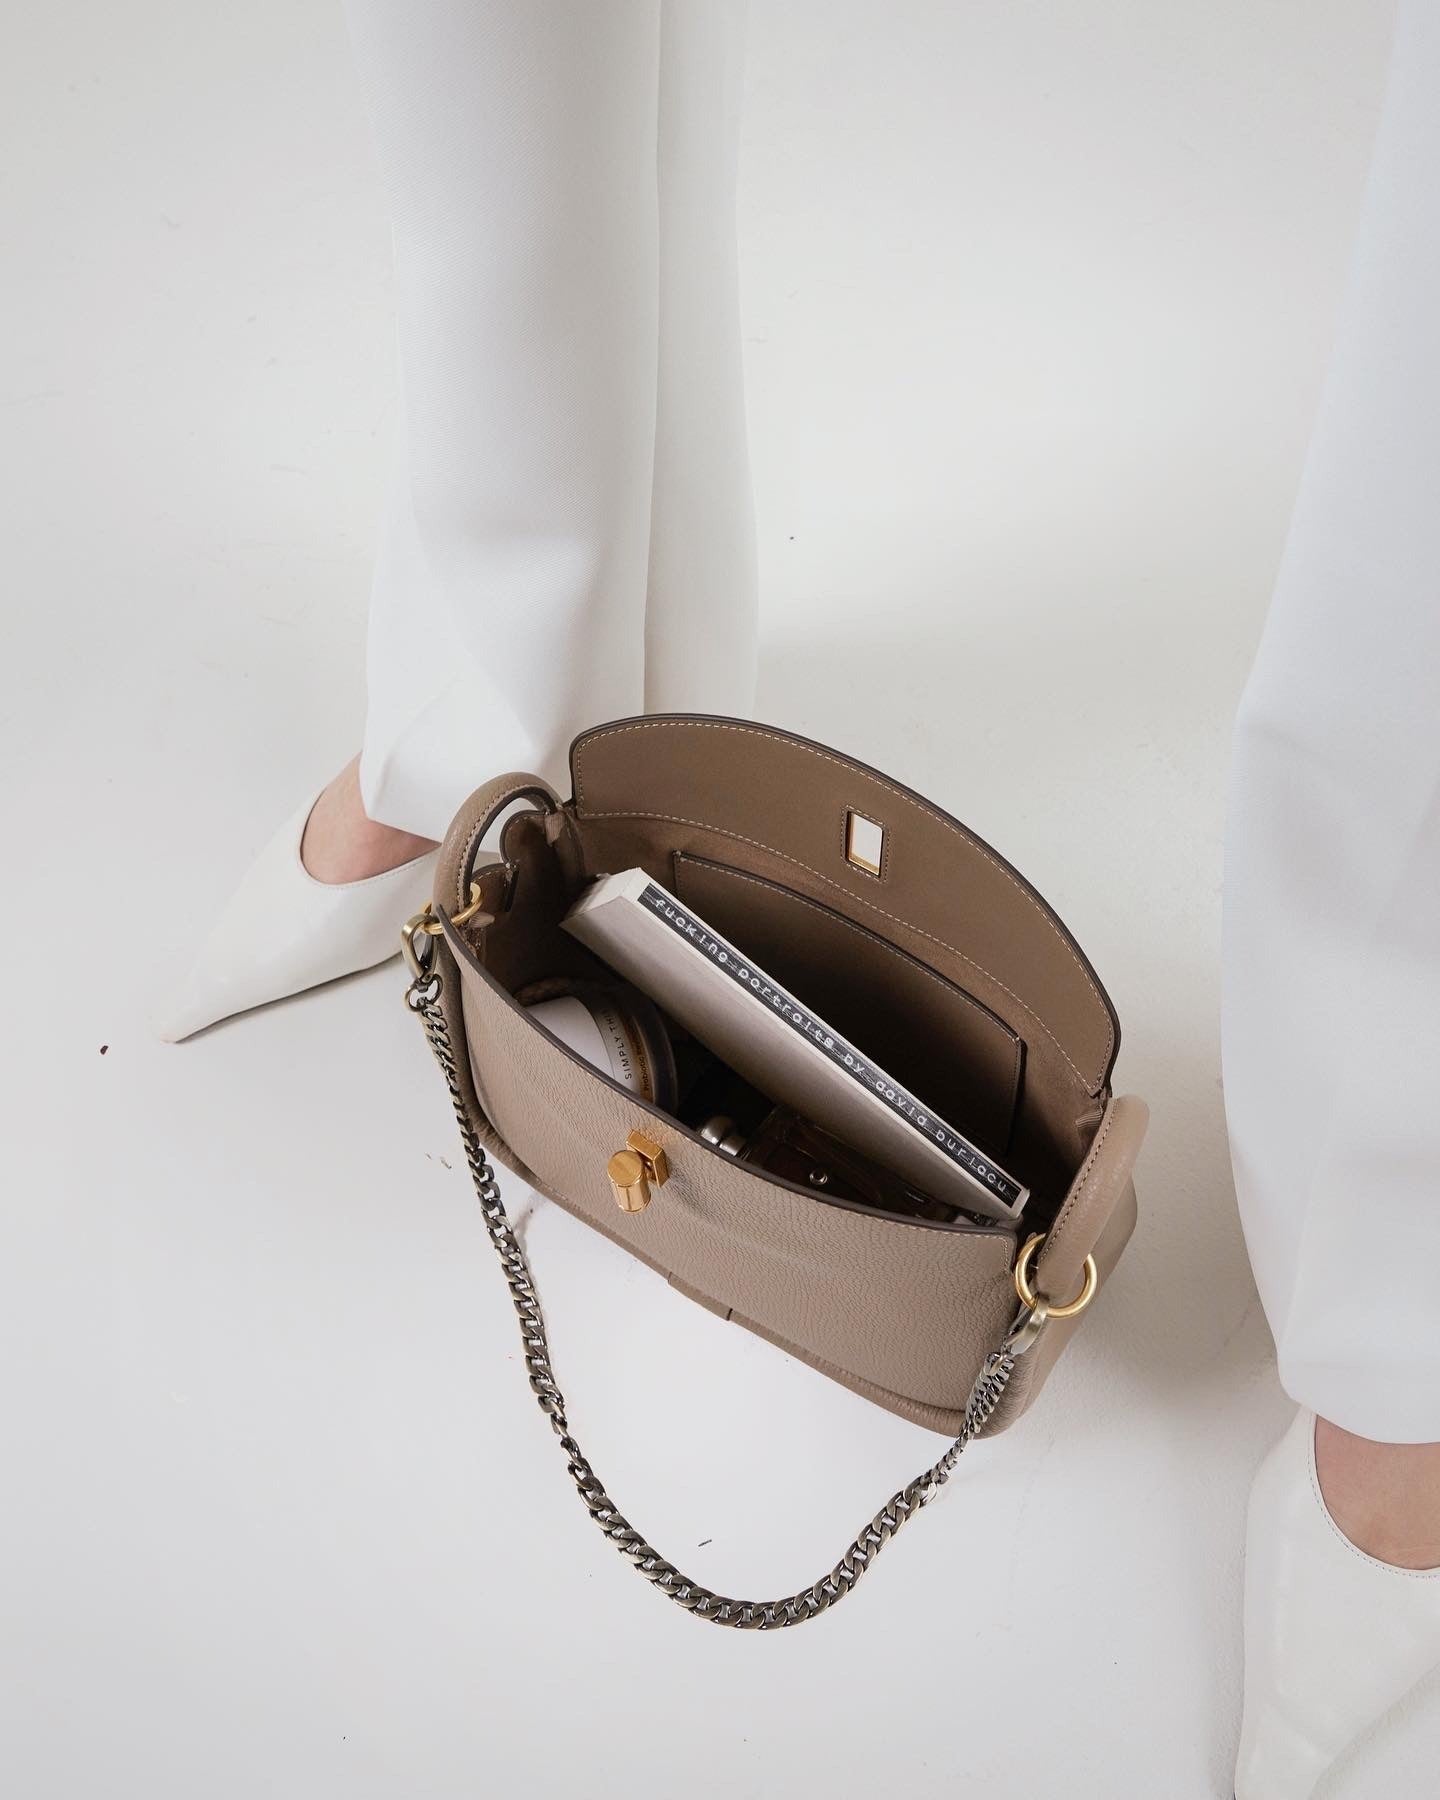 Chloé Chain-Link Shoulder Handbags